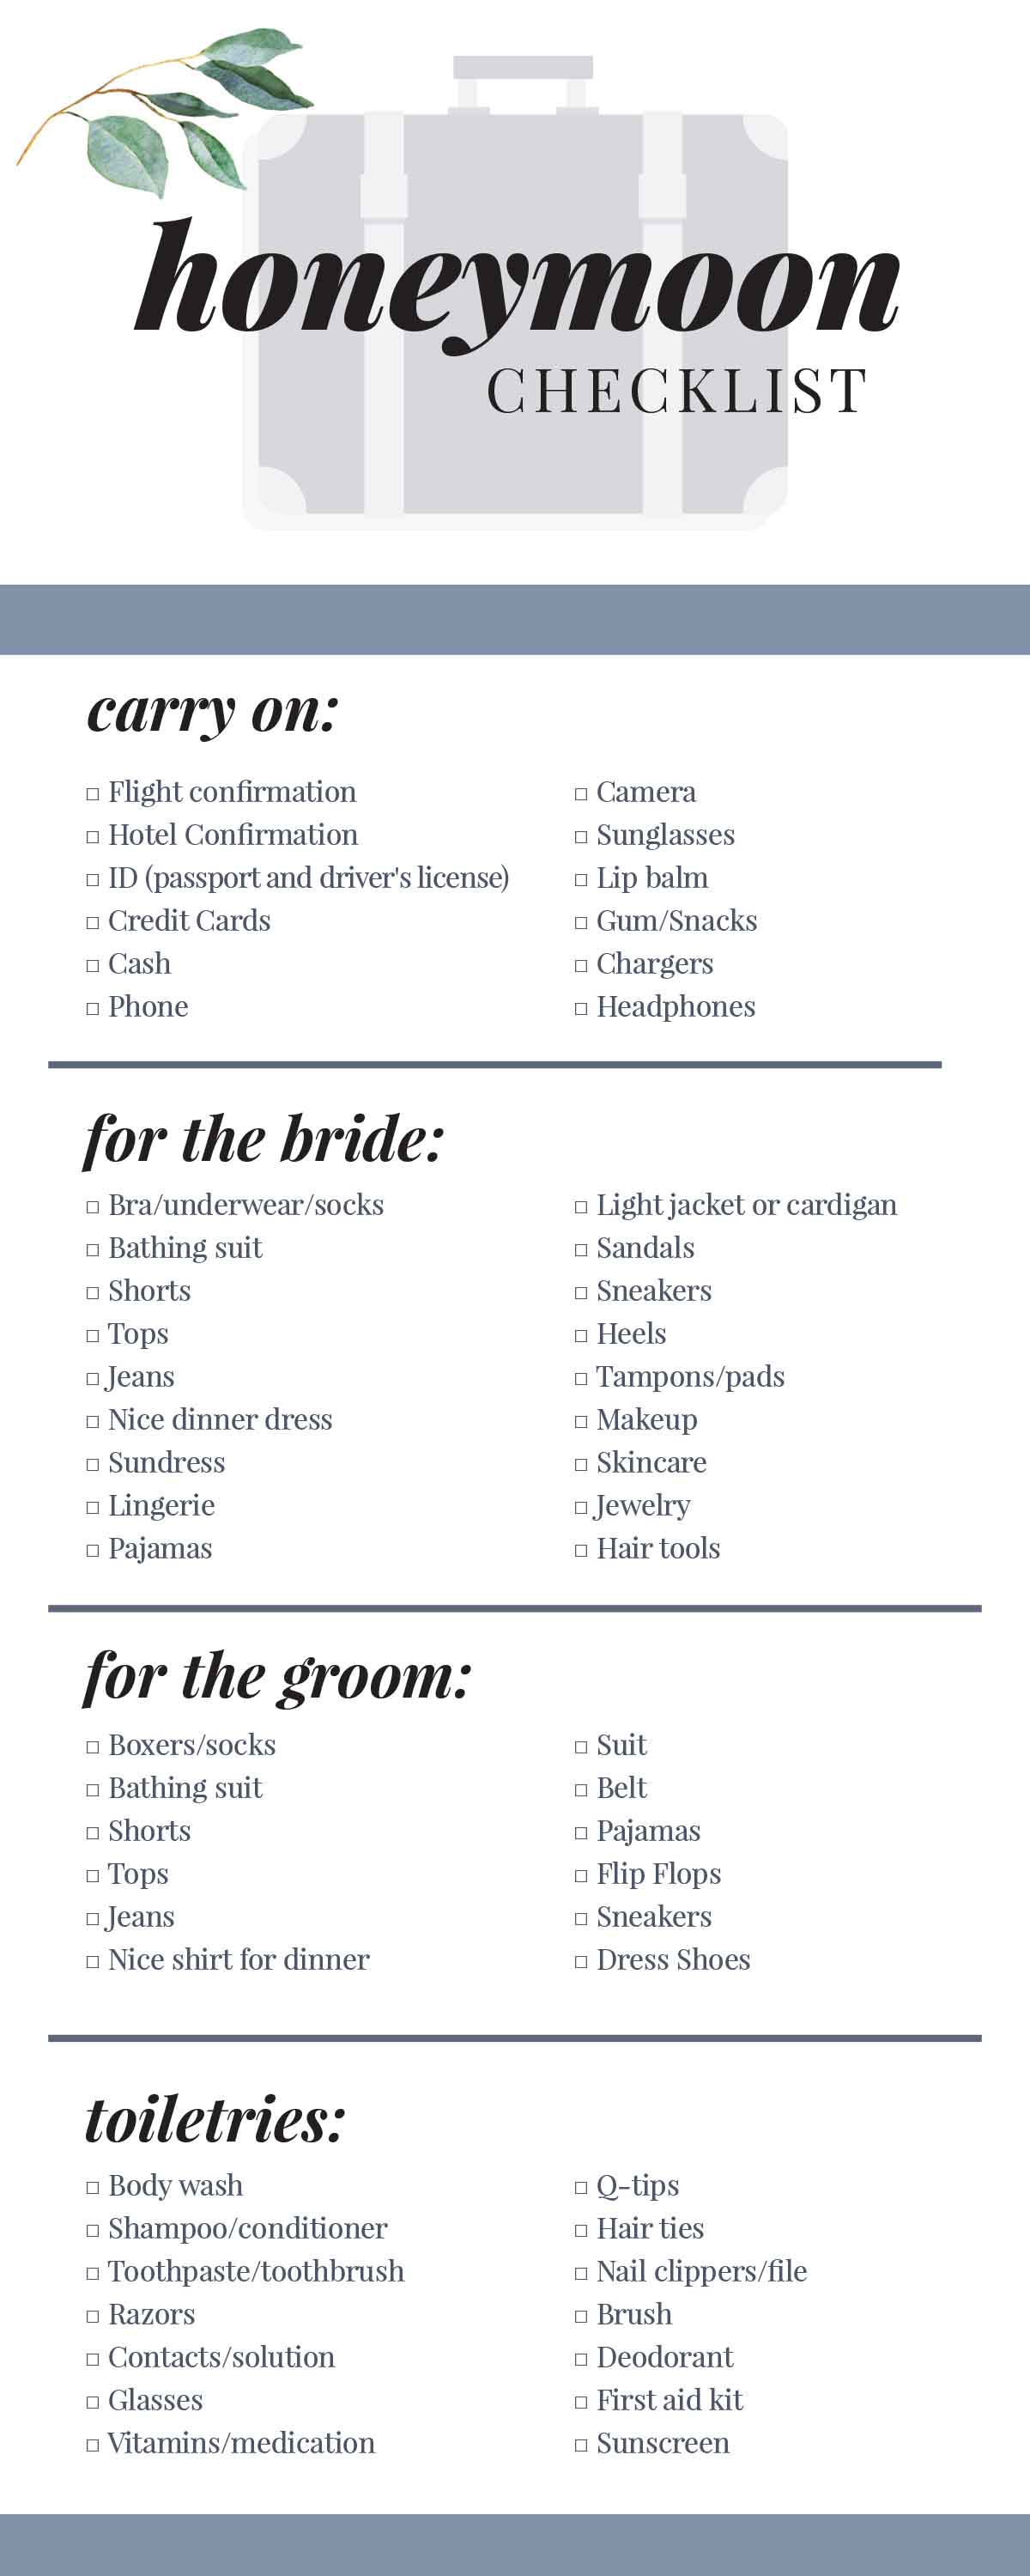 Get your free honeymoon checklist - I DO Y'ALL